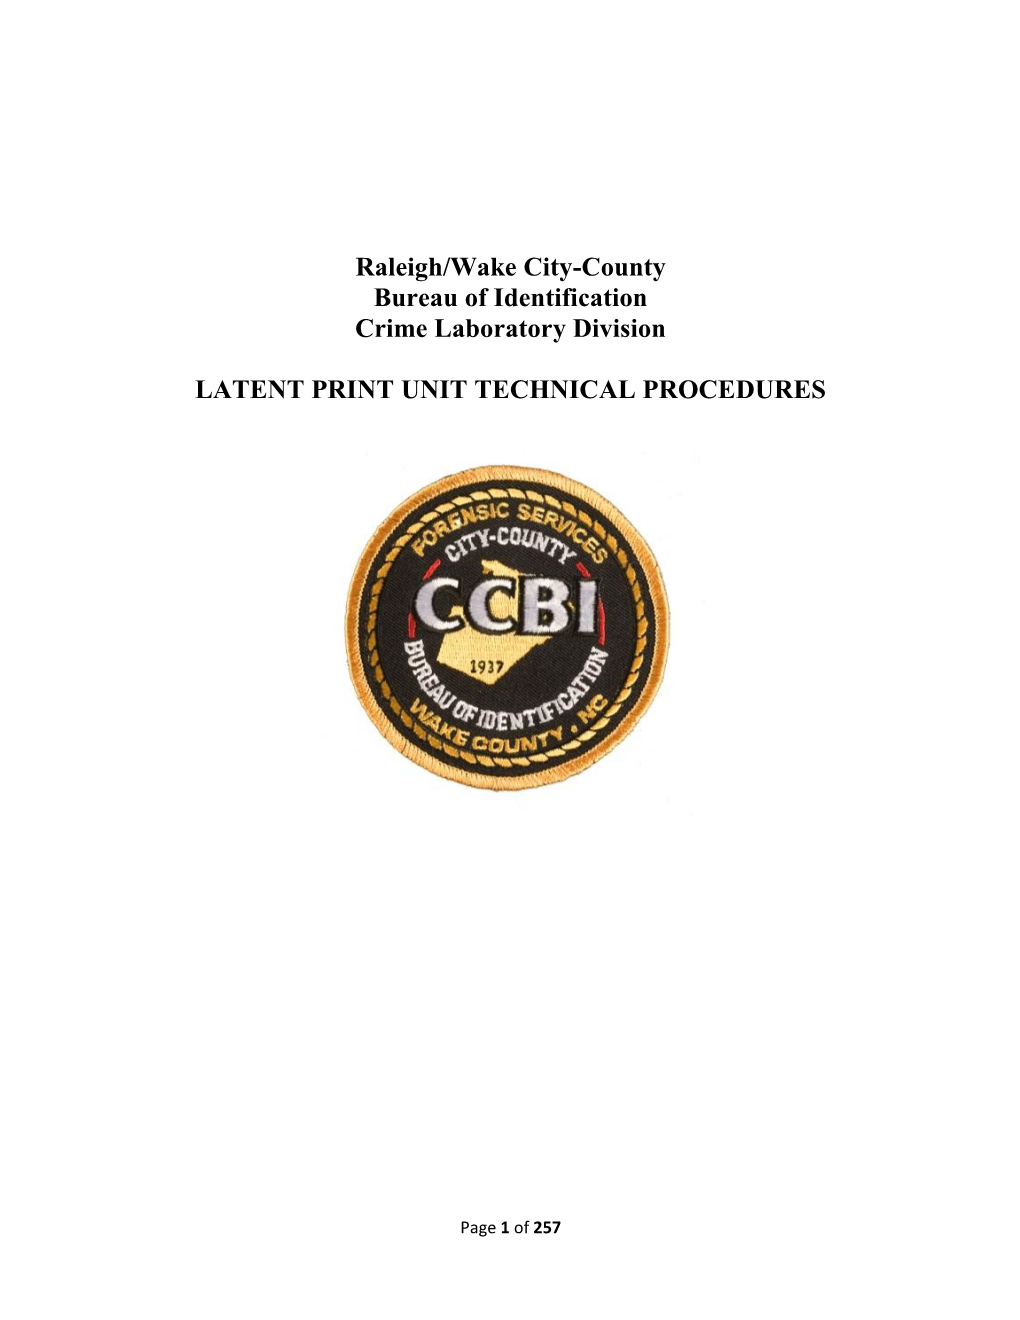 Raleigh/Wake City-County Bureau of Identification Latent Print Unit Technical Procedures Manual